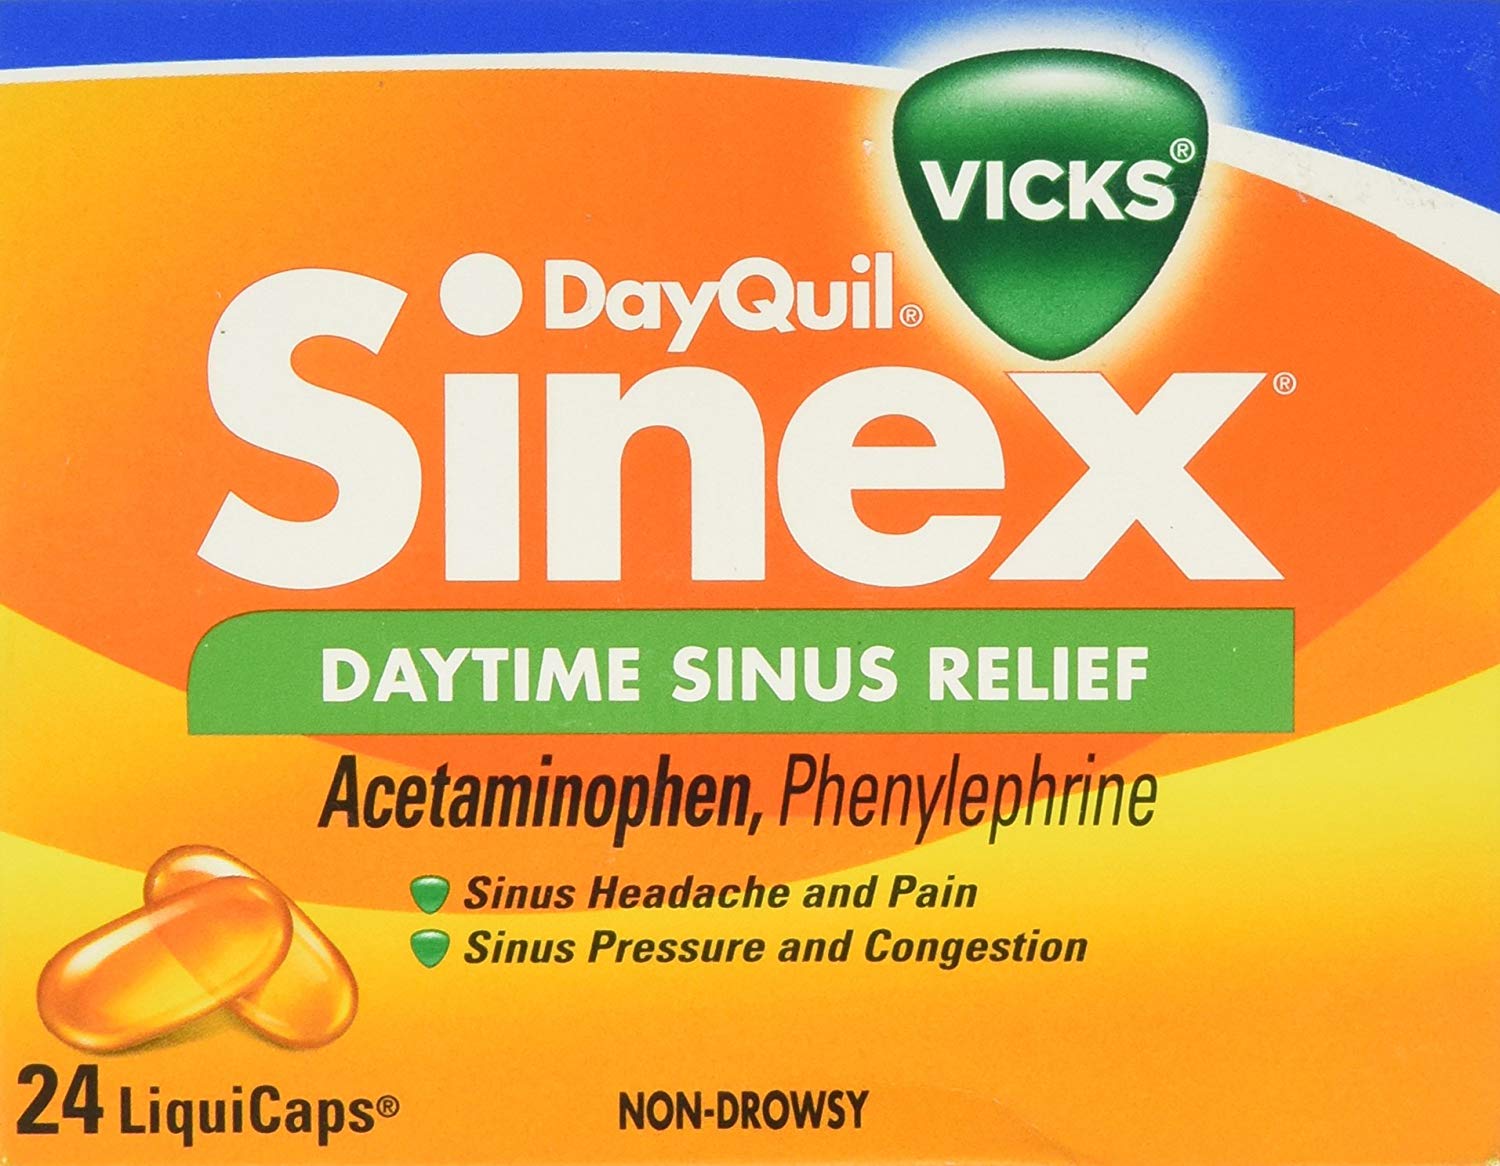 Dayquil Logo - Amazon.com: Vicks Dayquil Sinex Daytime Sinus Relief Liquicaps 24 ...